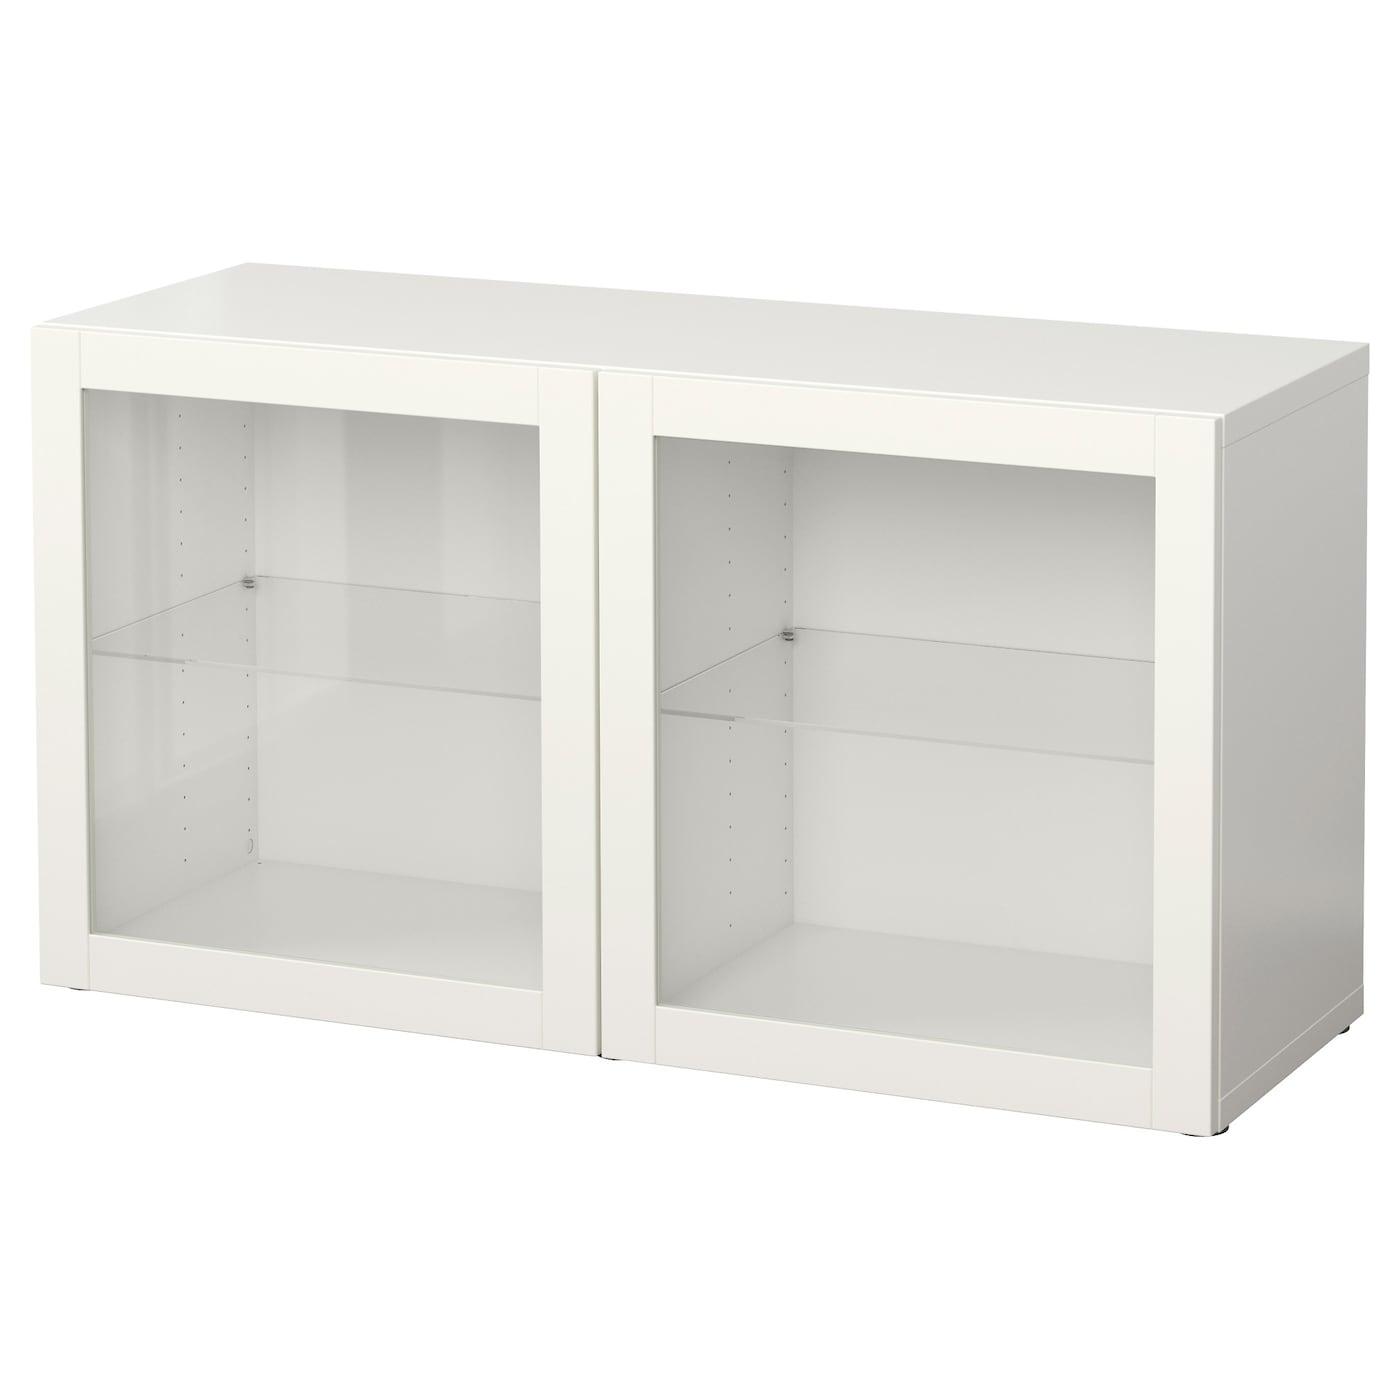 Шкаф - IKEA BESTÅ/BESTA, 120x40x64 см, белый, Бесто ИКЕА